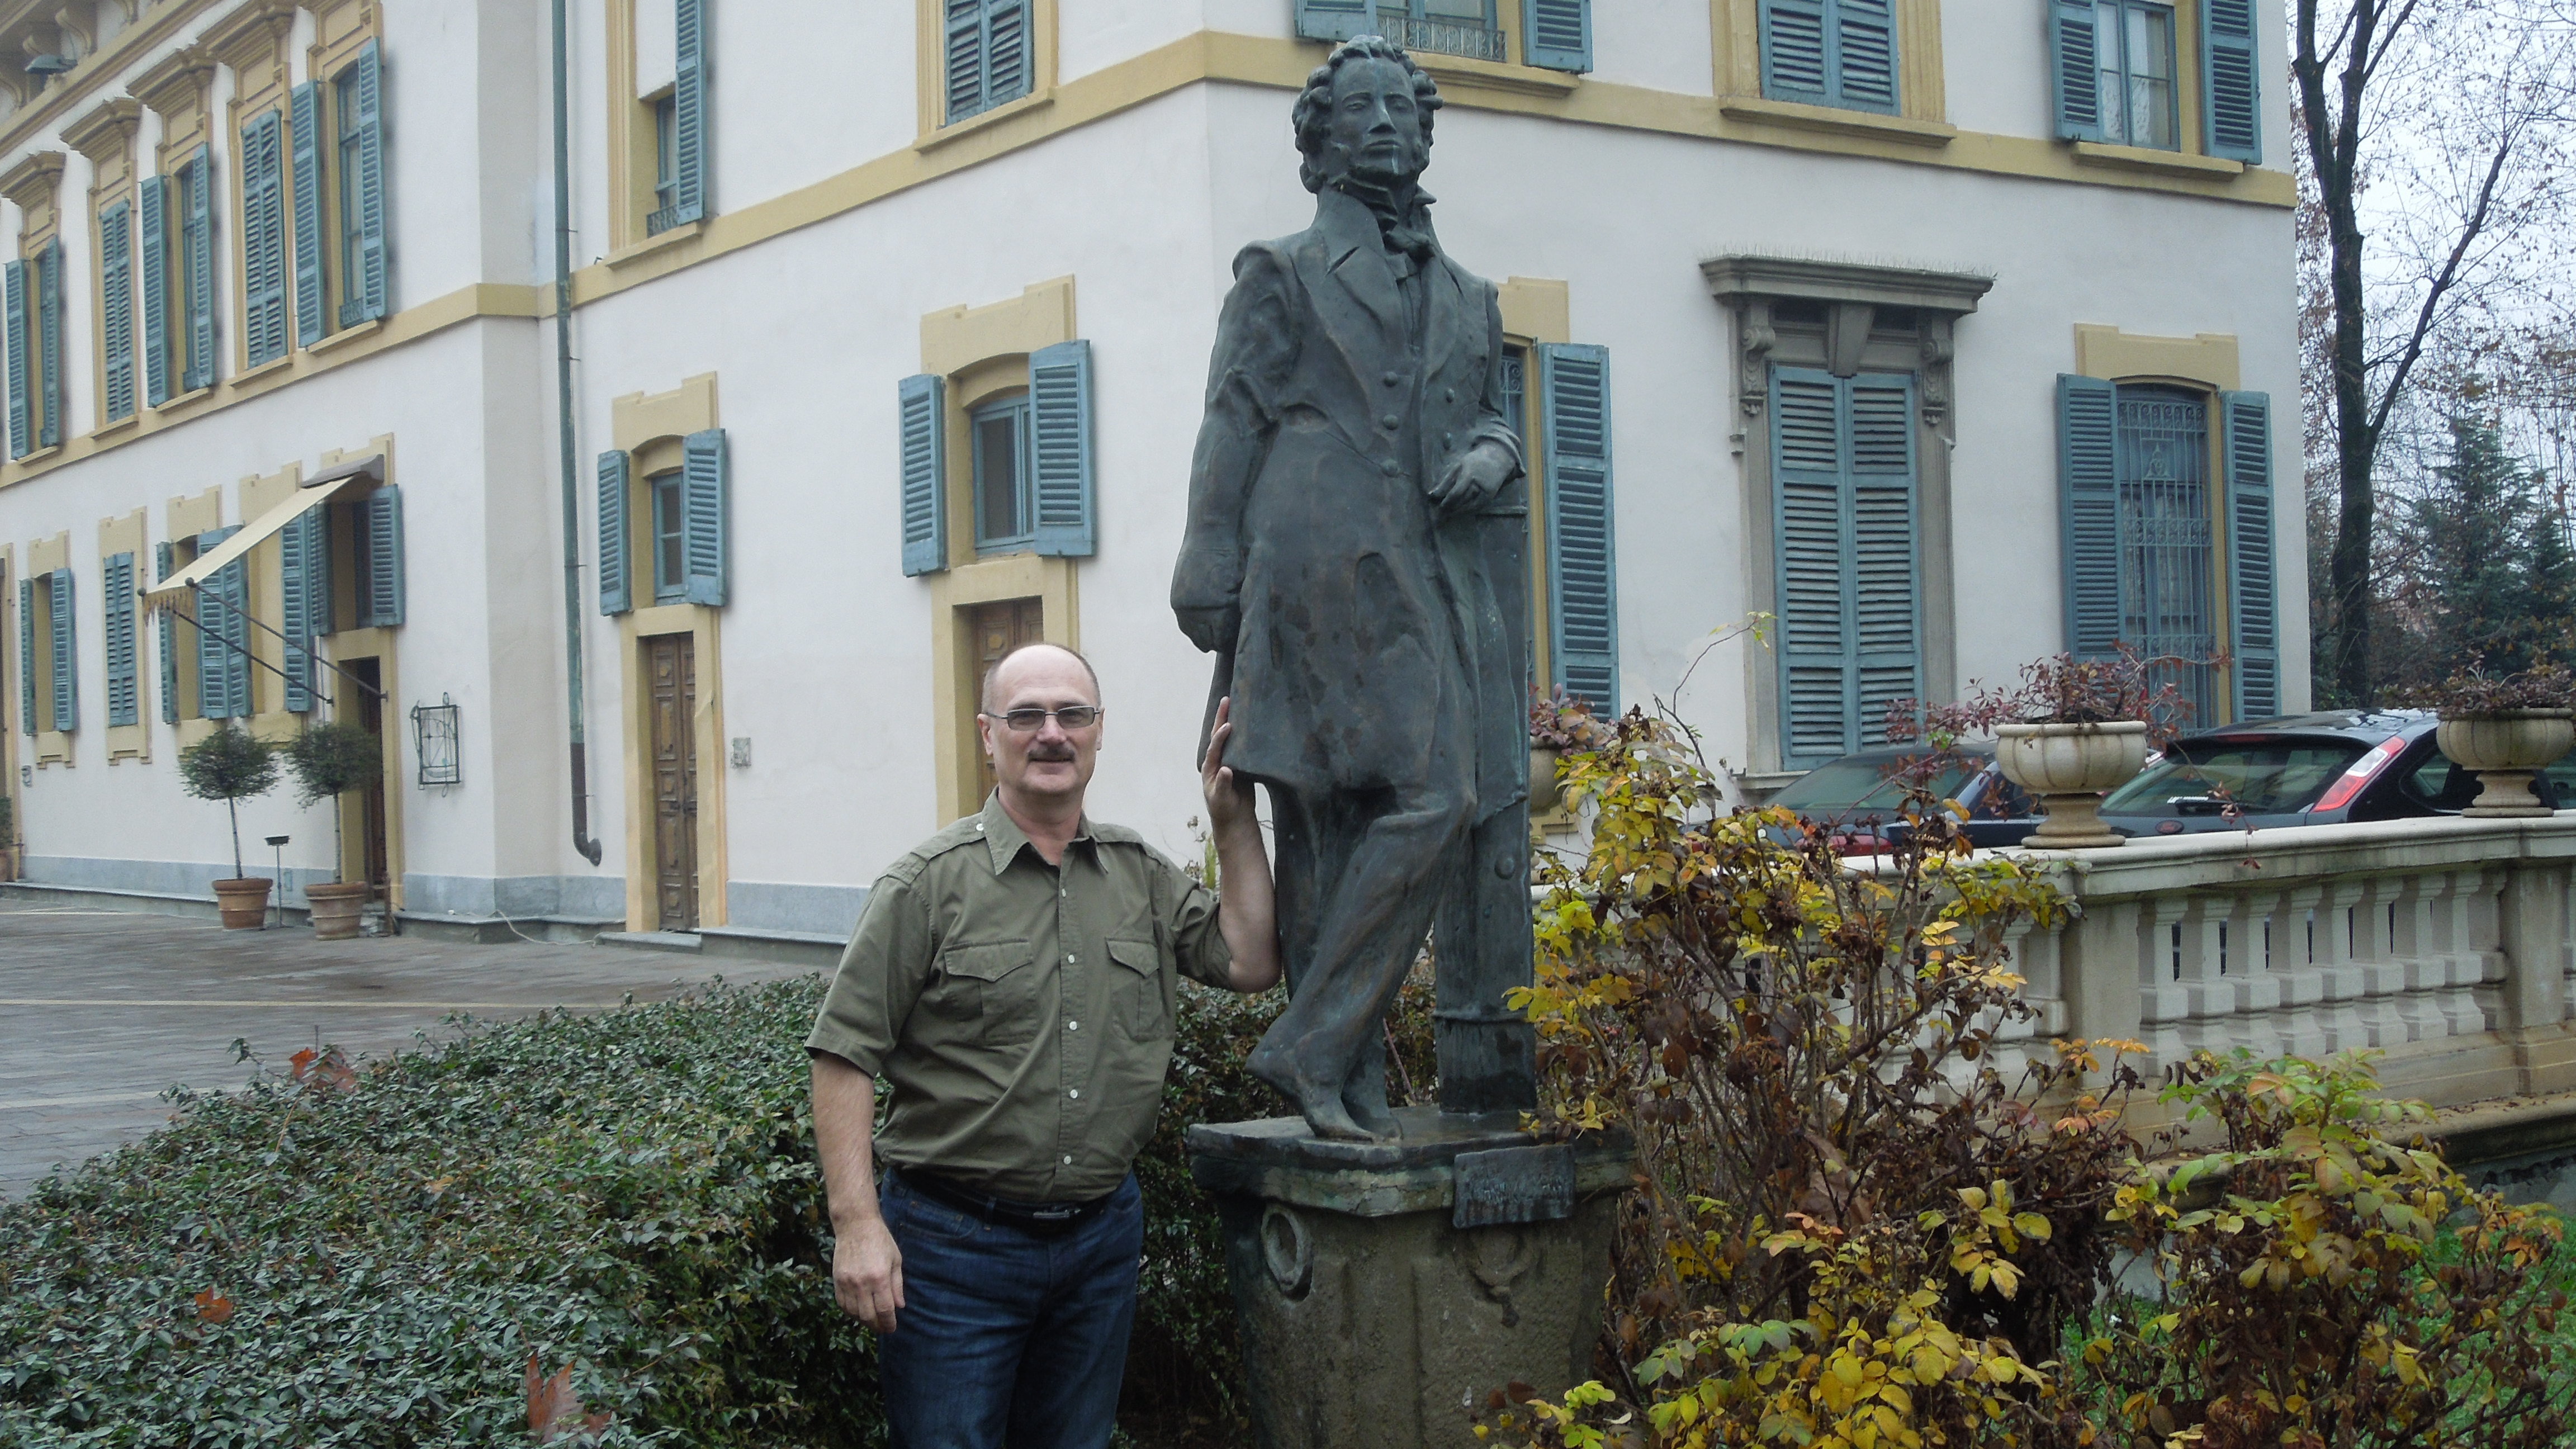 У памятника А.С. Пушкину в Сенаго, Италия